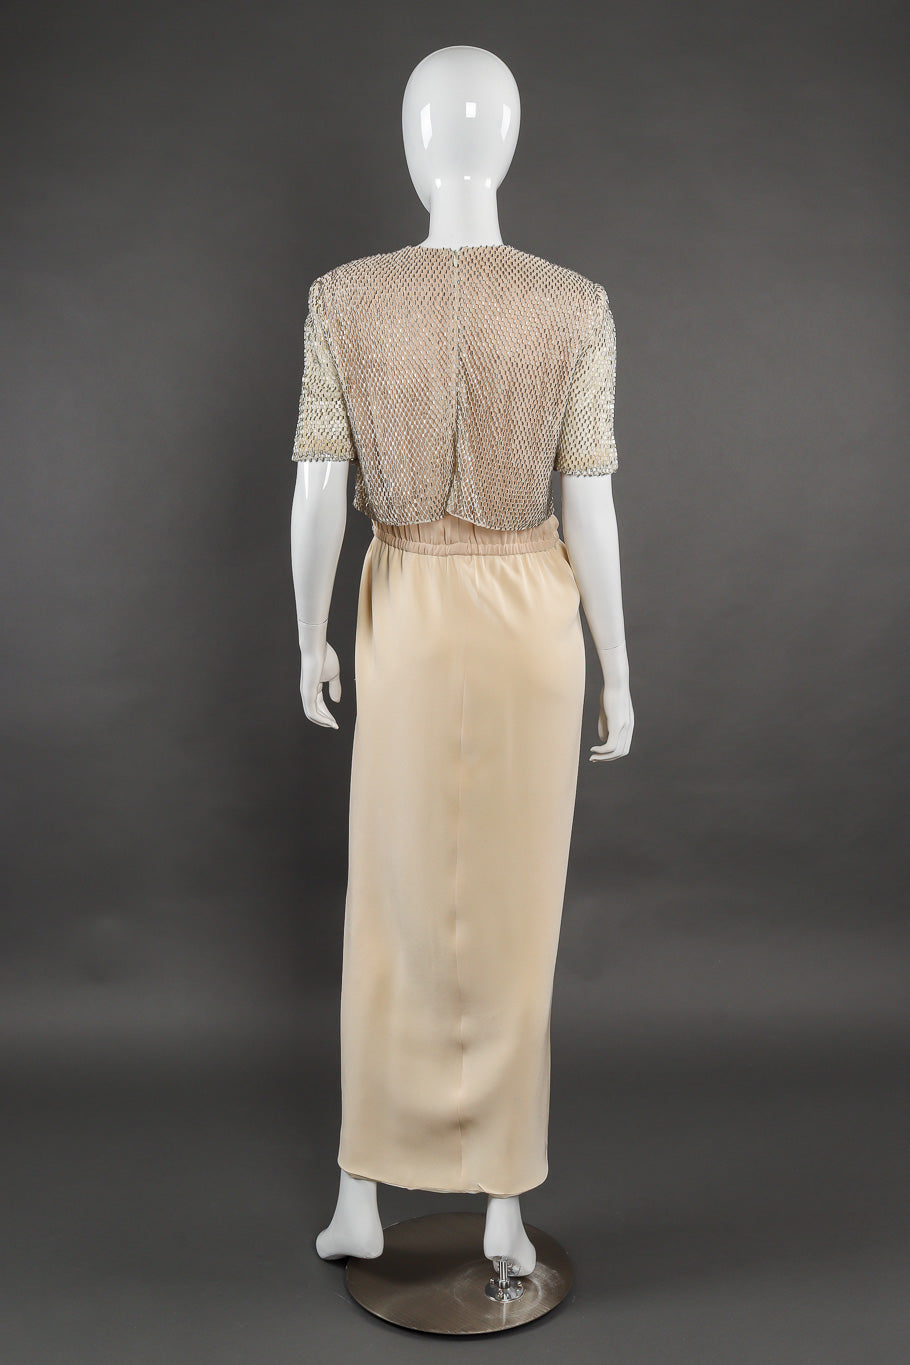 Vintage Sansappelle Beaded Chainmail Dress back view on mannequin @Recessla